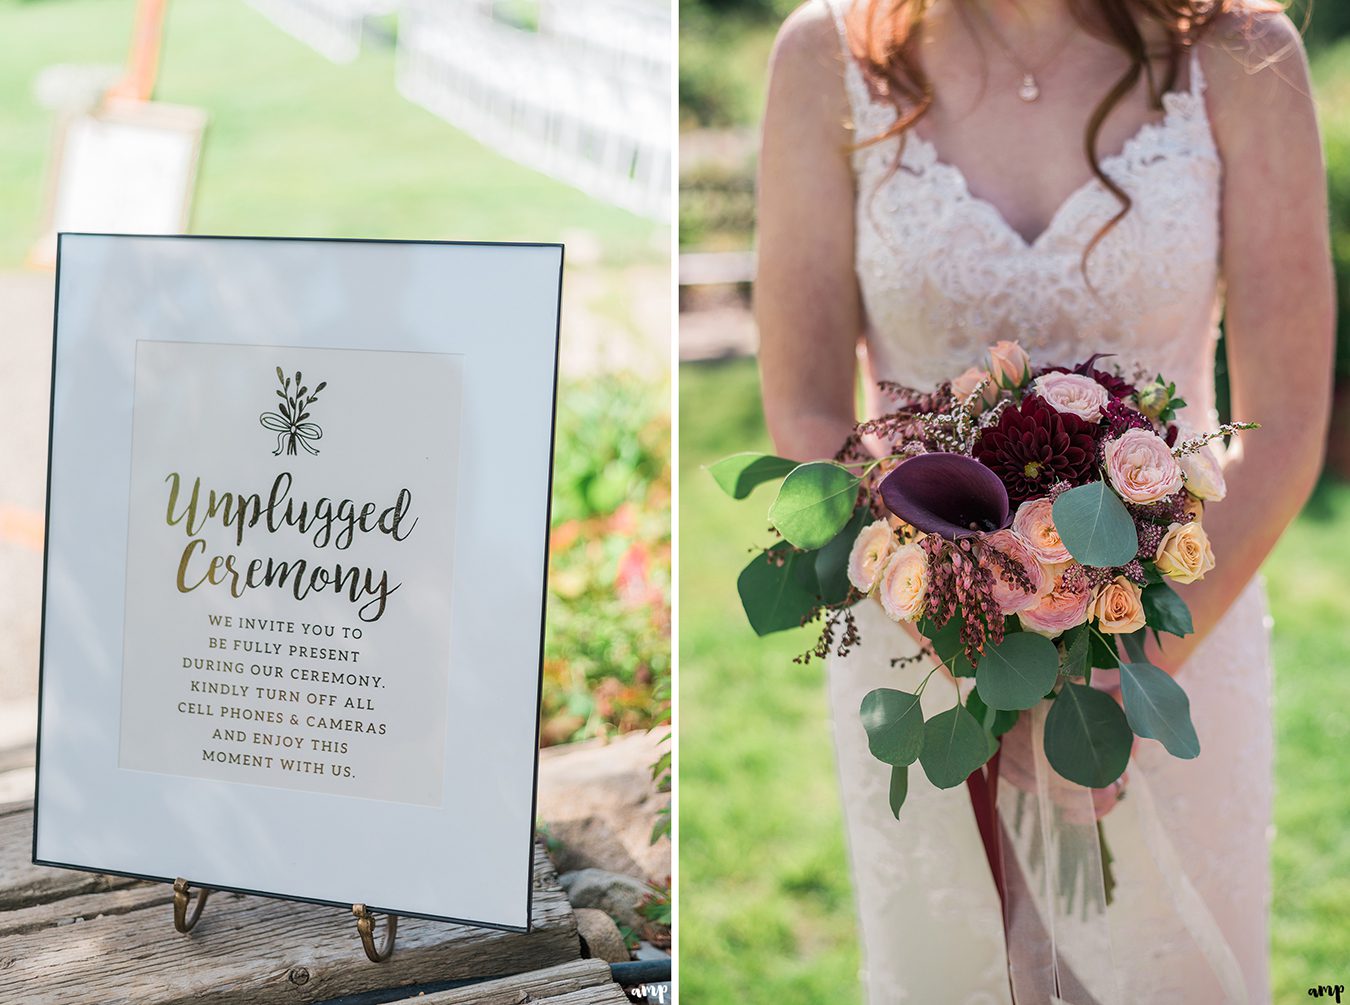 Unplugged Ceremony sign idea & bride's fall bouquet